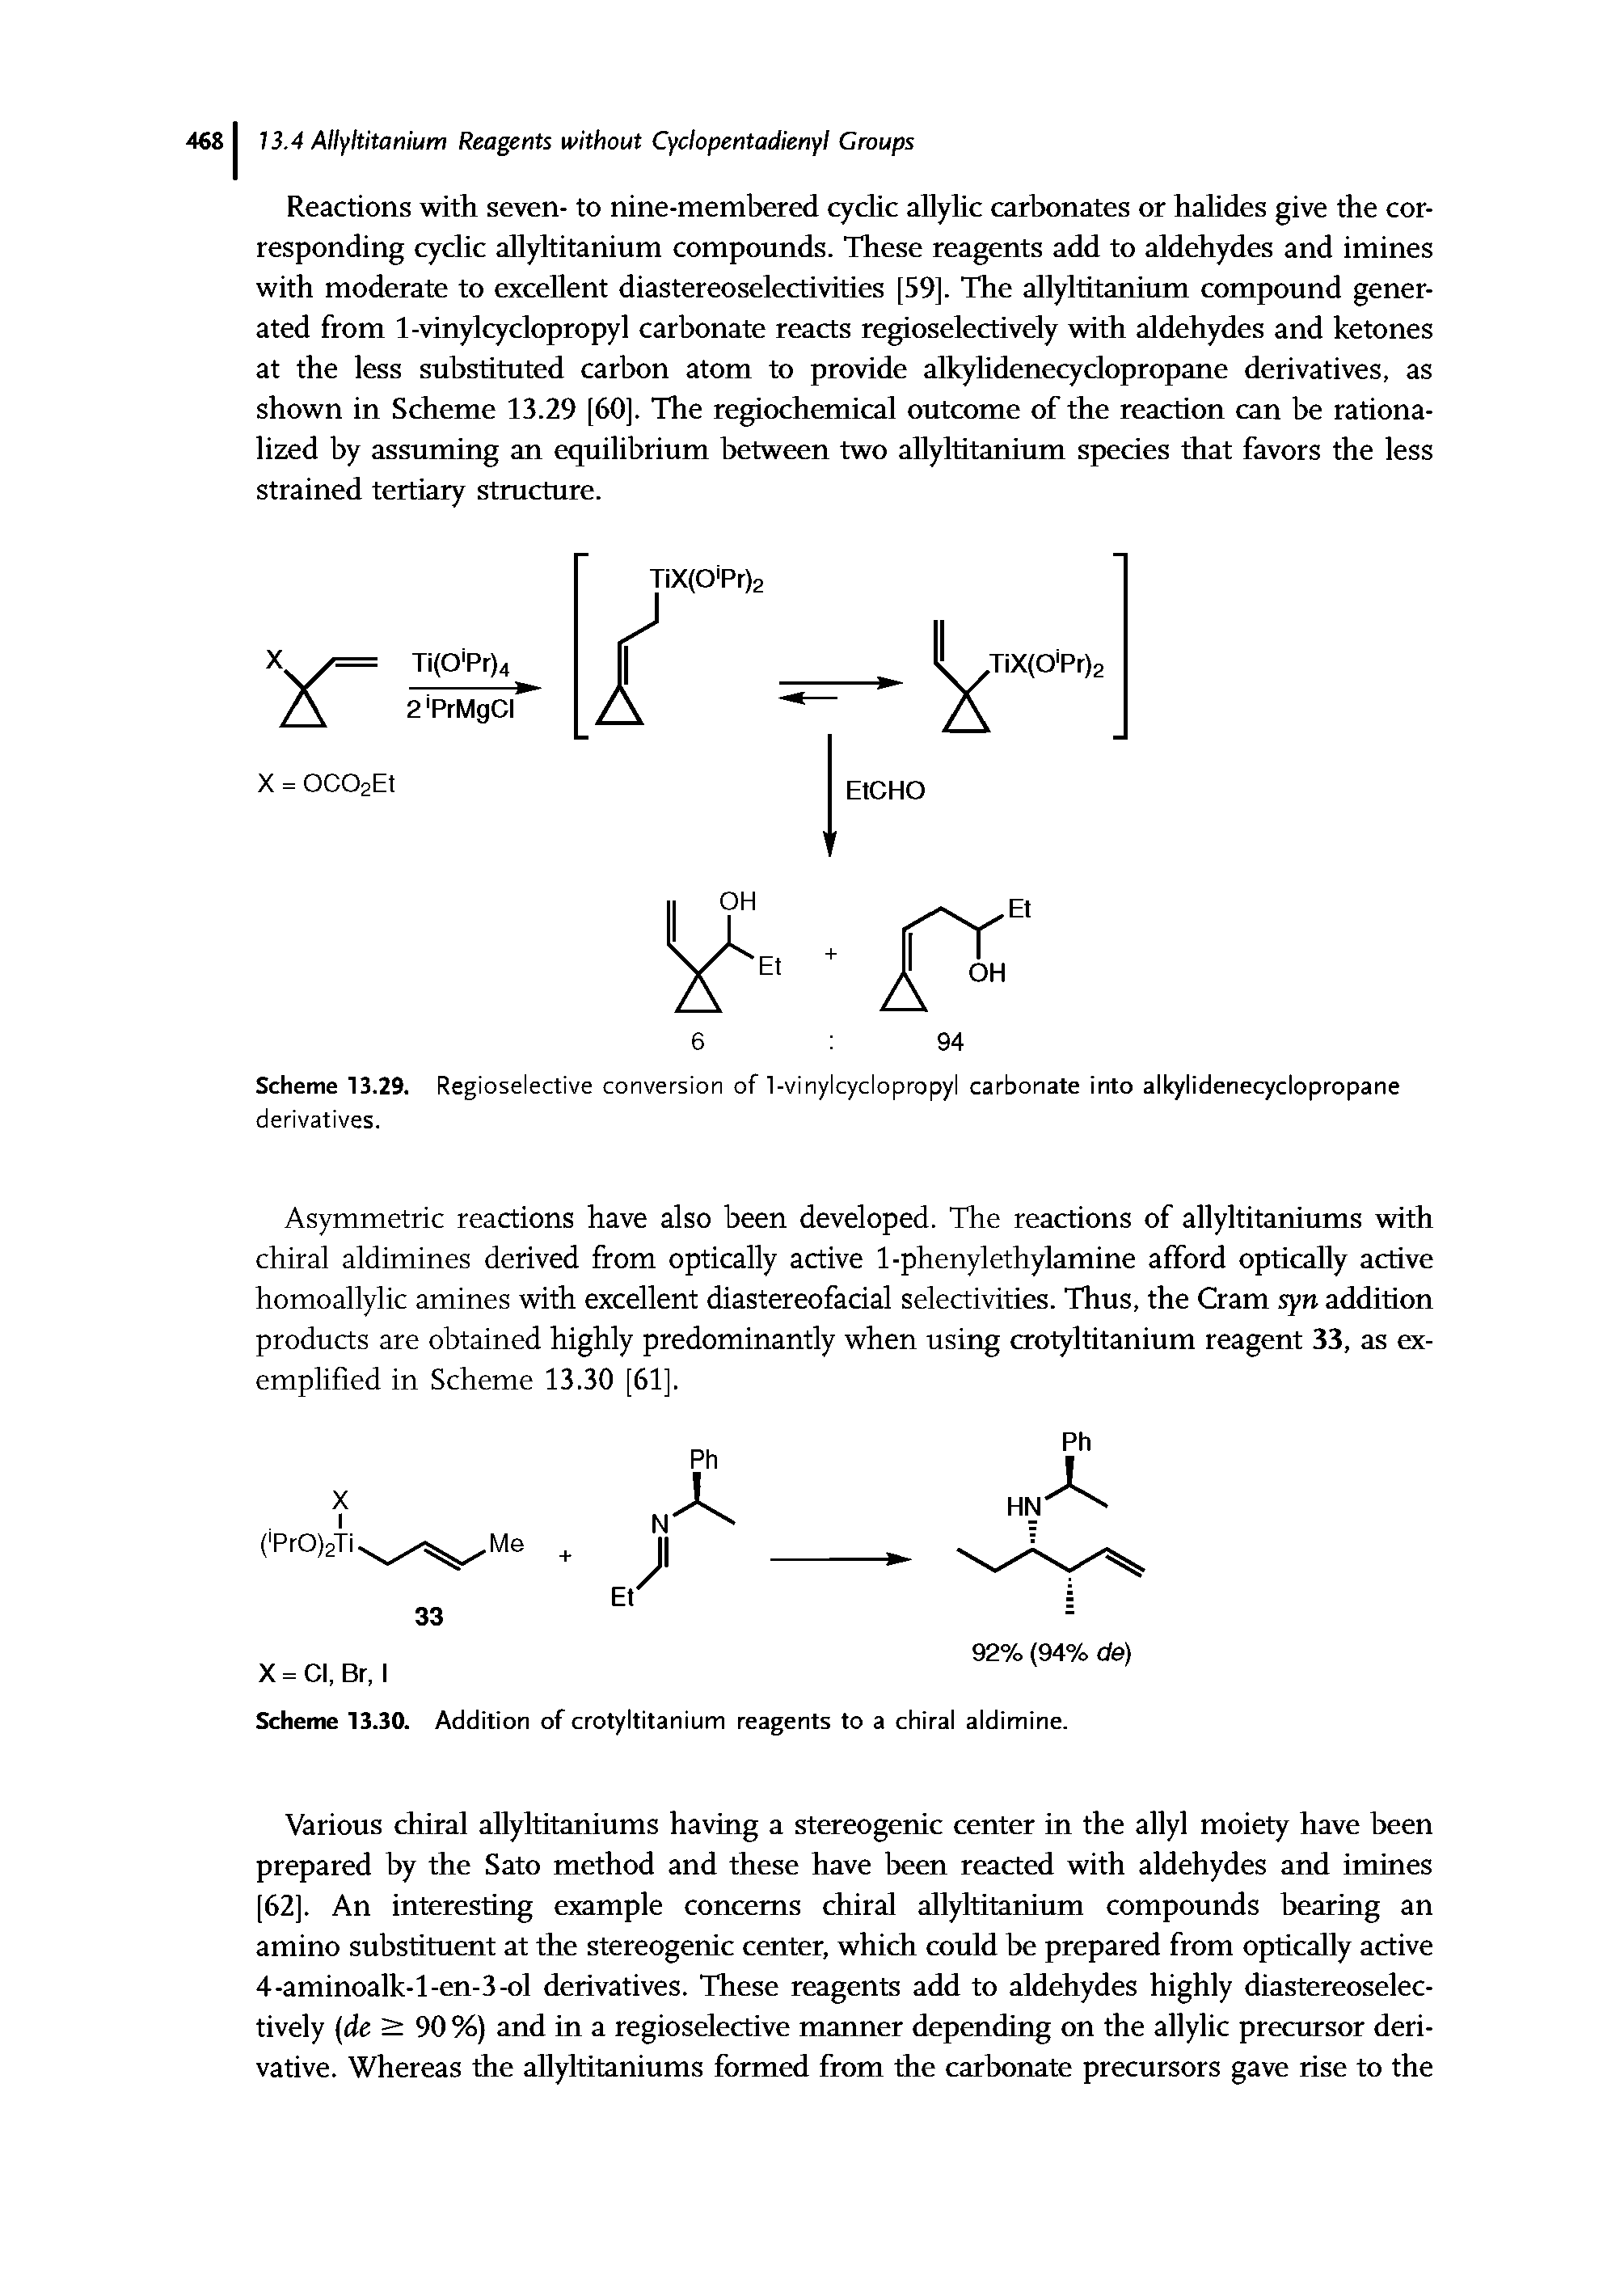 Scheme 13.30. Addition of crotyltitanium reagents to a chiral aldimine.